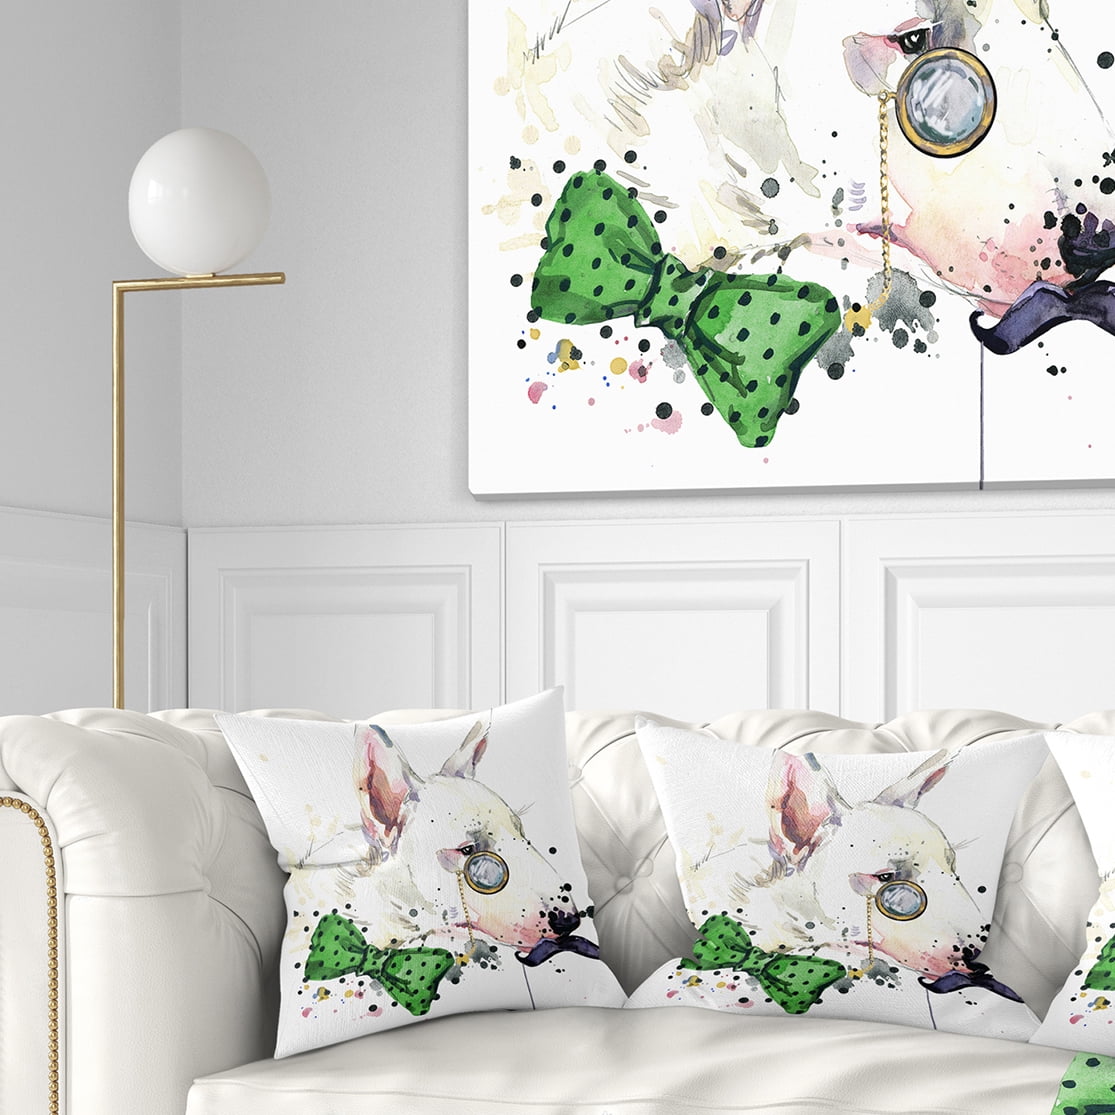 Whyitsme Design Bull Terrier Dog Design Throw Pillow 16x16 Multicolor